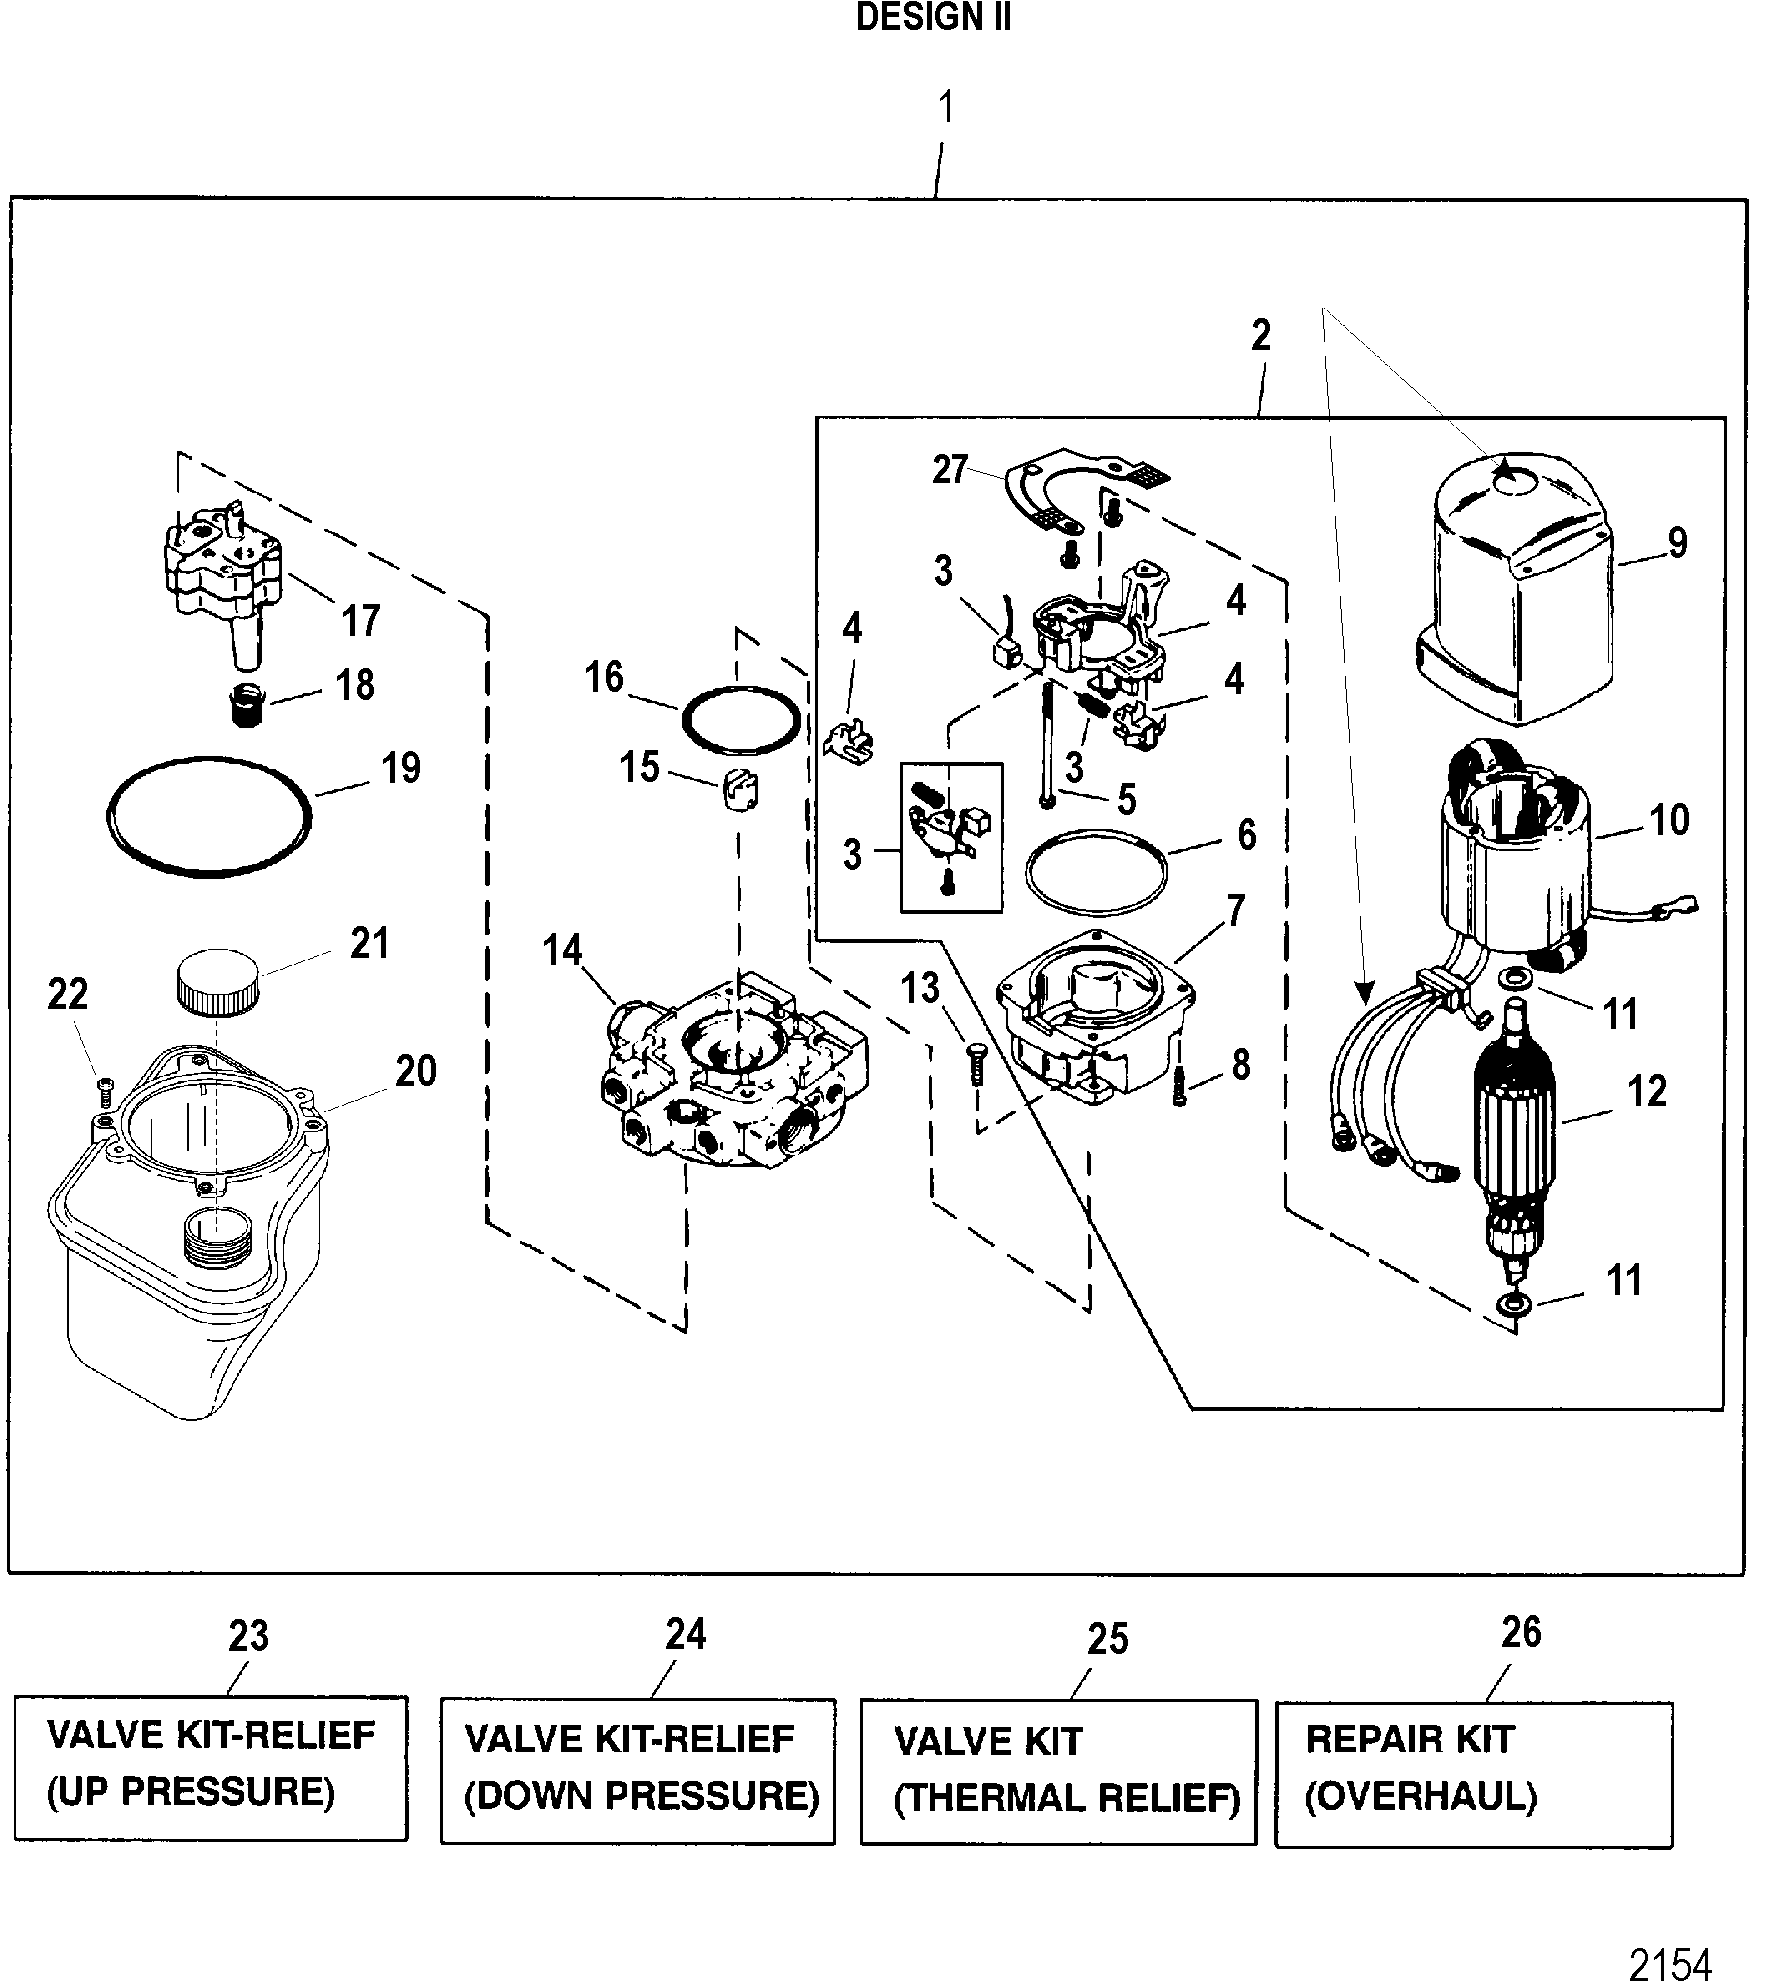 Pump/Motor(Top Mount Reservoir) (Design II - 14336A25)